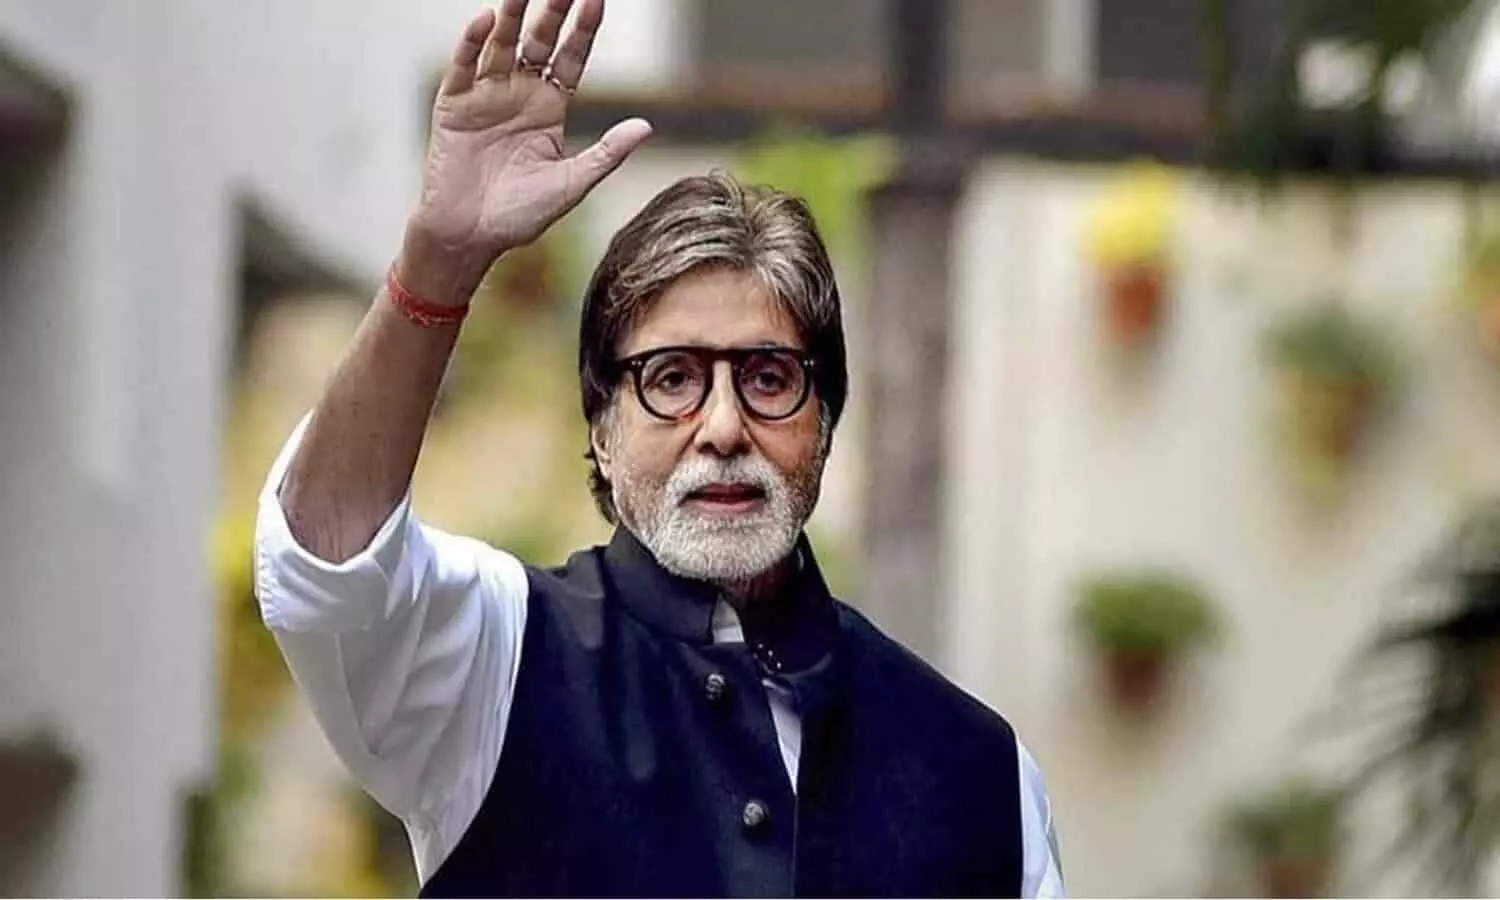 Amitabh Bachchan: अमिताभ बच्चन के लगी चोट, अभिषेक बच्चन लेकर अस्पताल पहुंचे, जानिए पूरा मामला